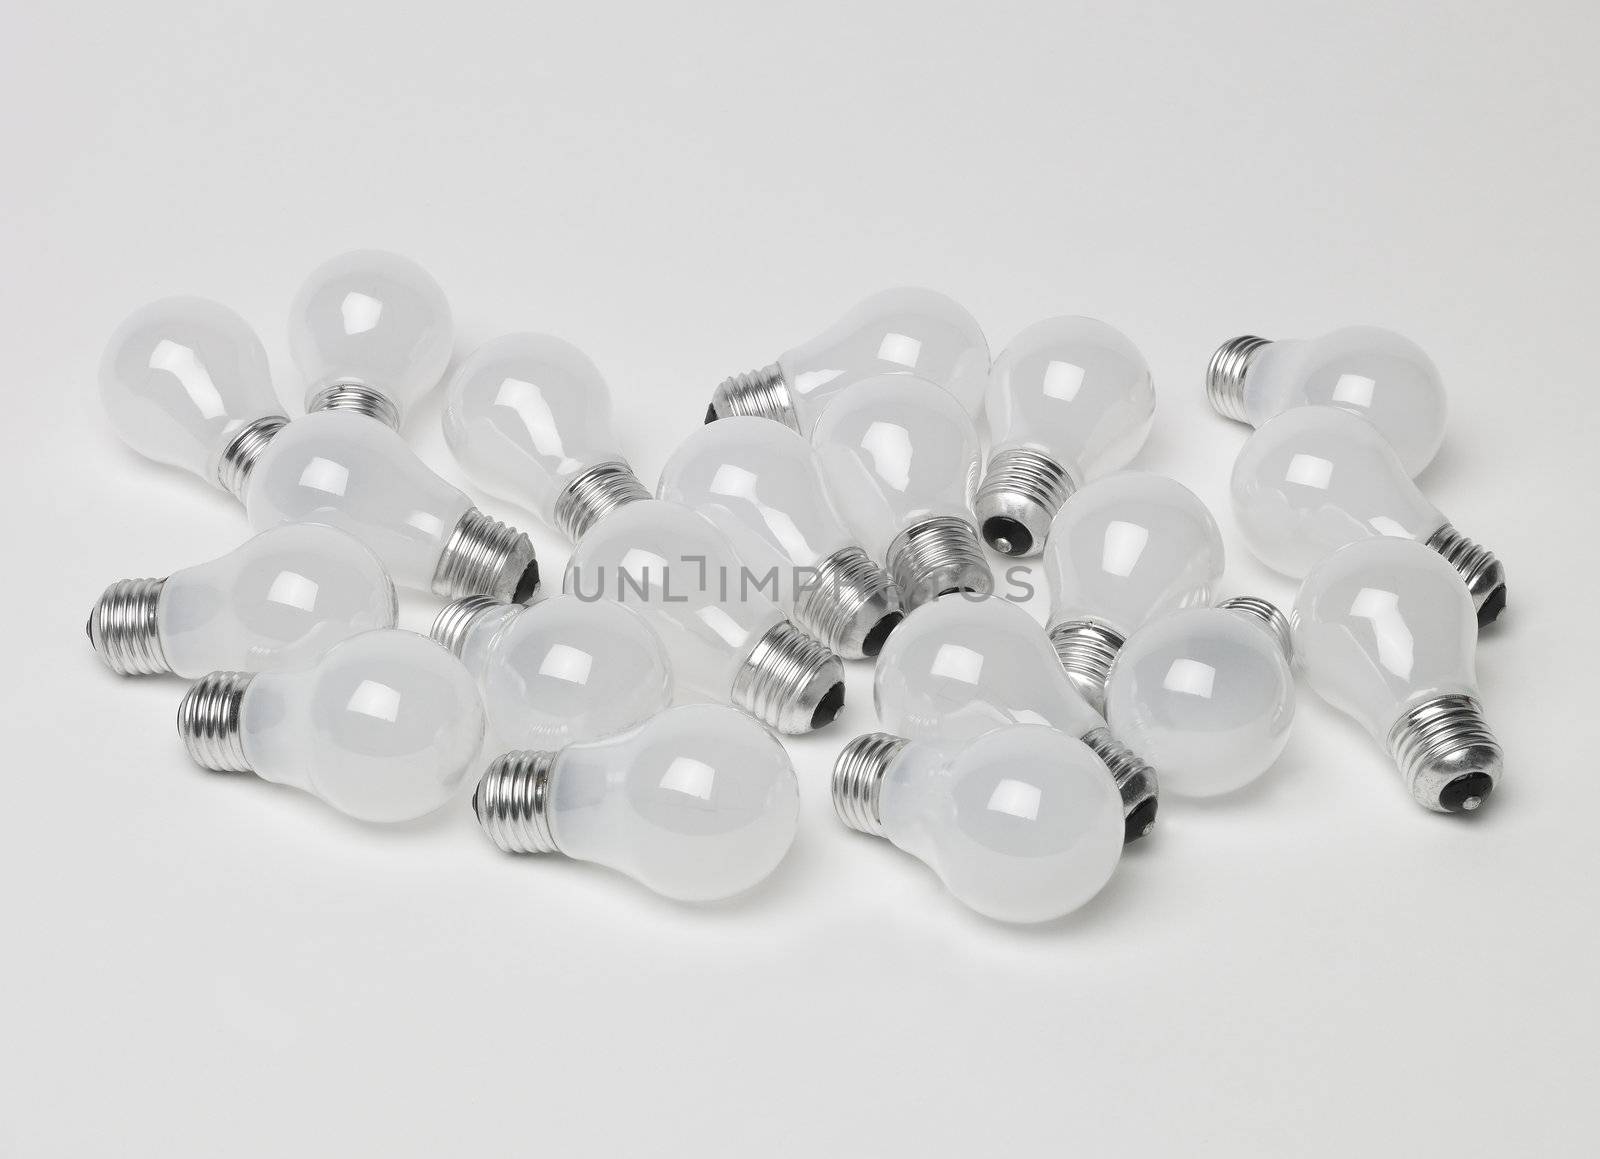 Pile of light bulbs by gemenacom